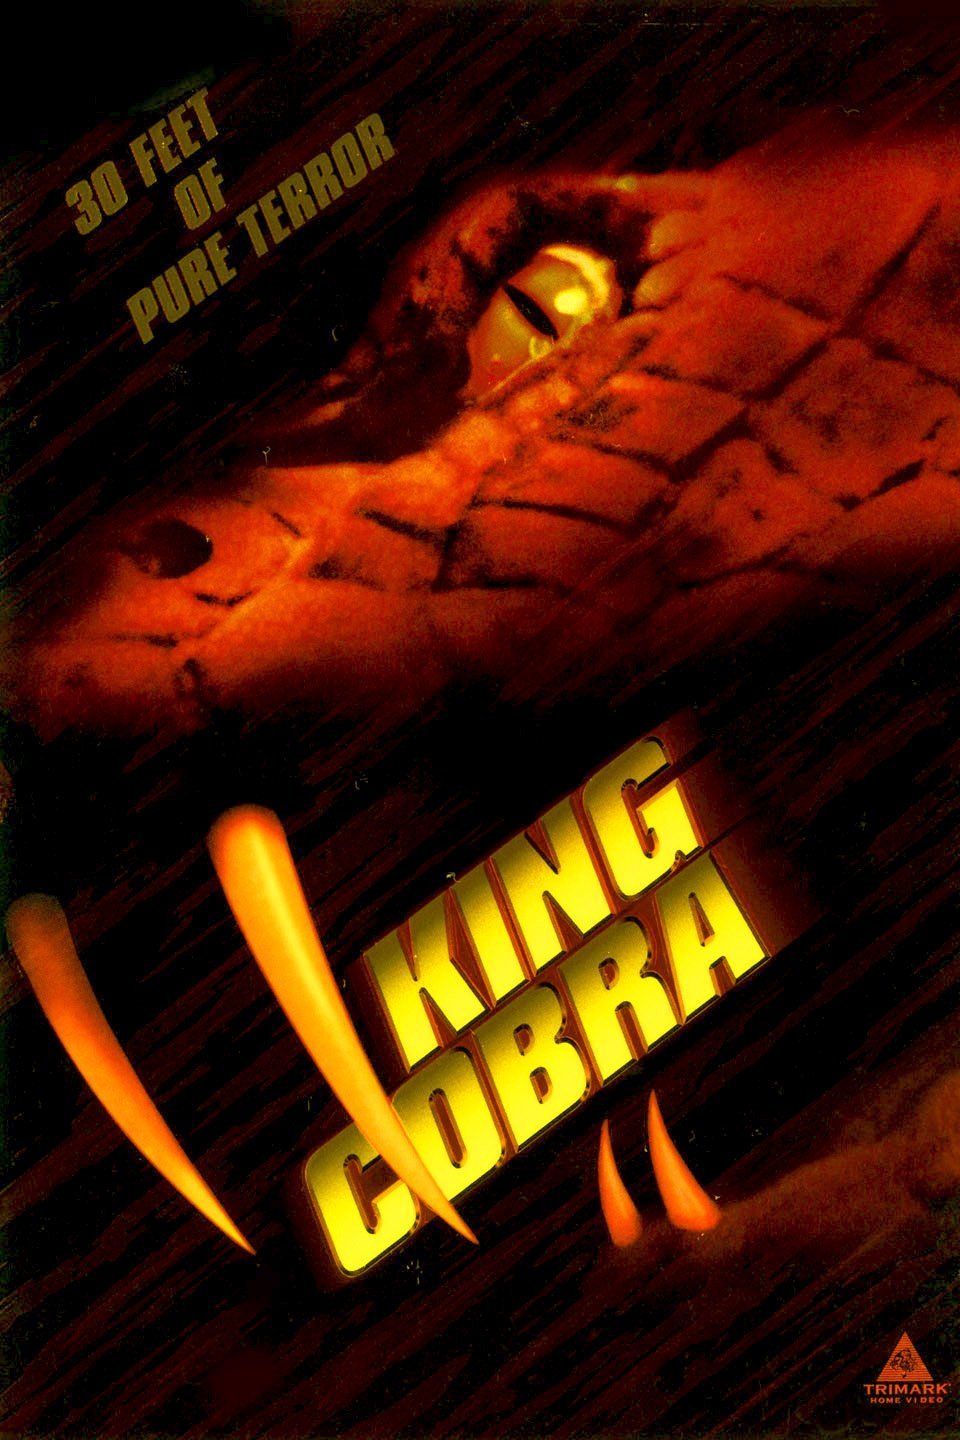 L'affiche du film King Cobra